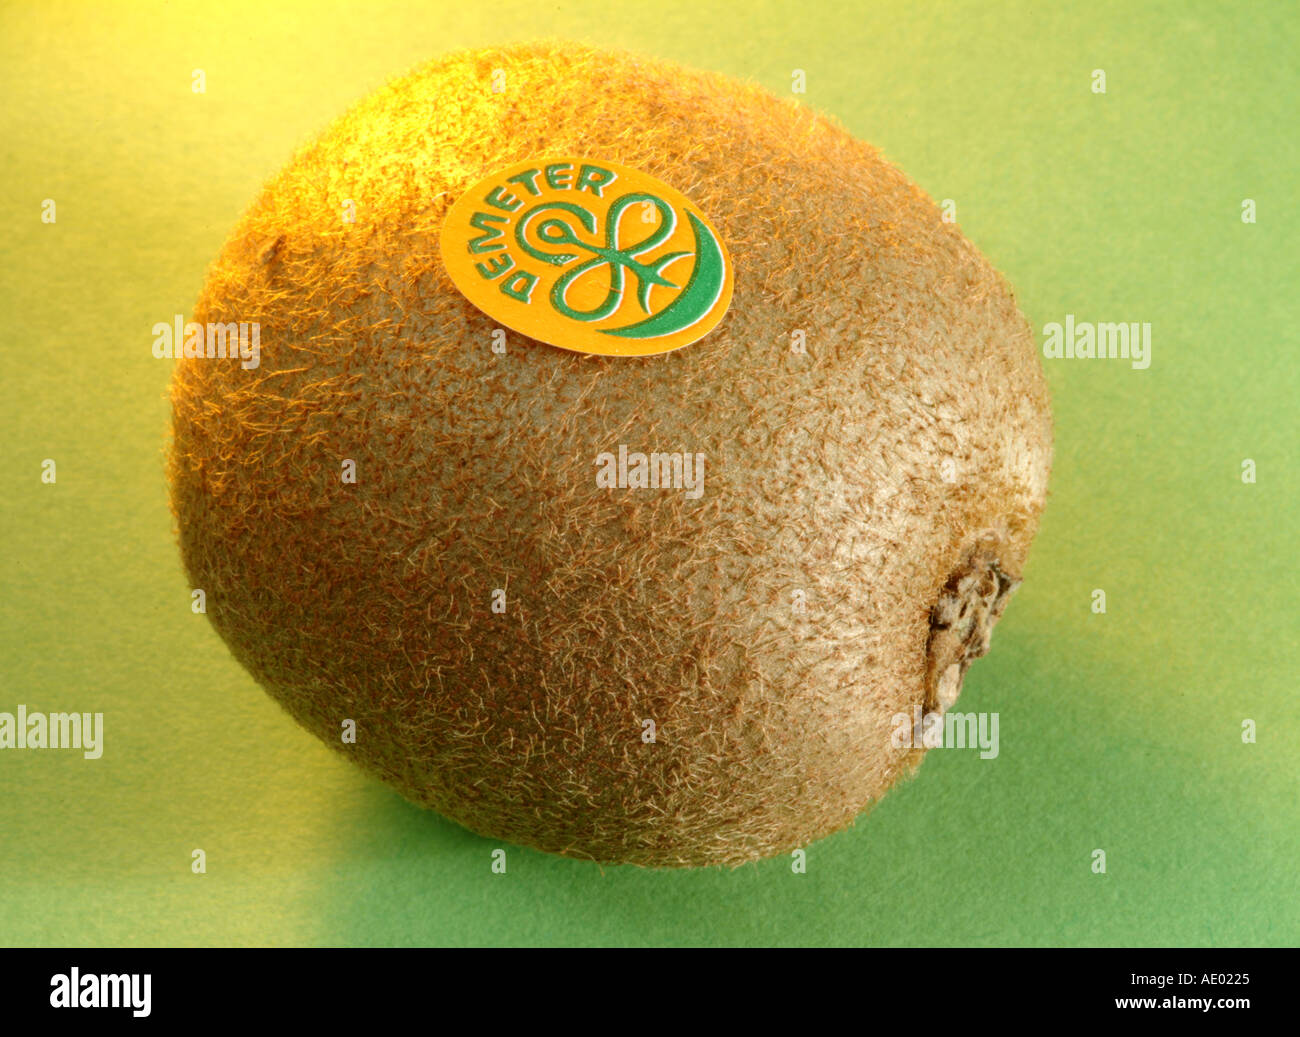 Demeter label german bio label on kiwi Stock Photo - Alamy